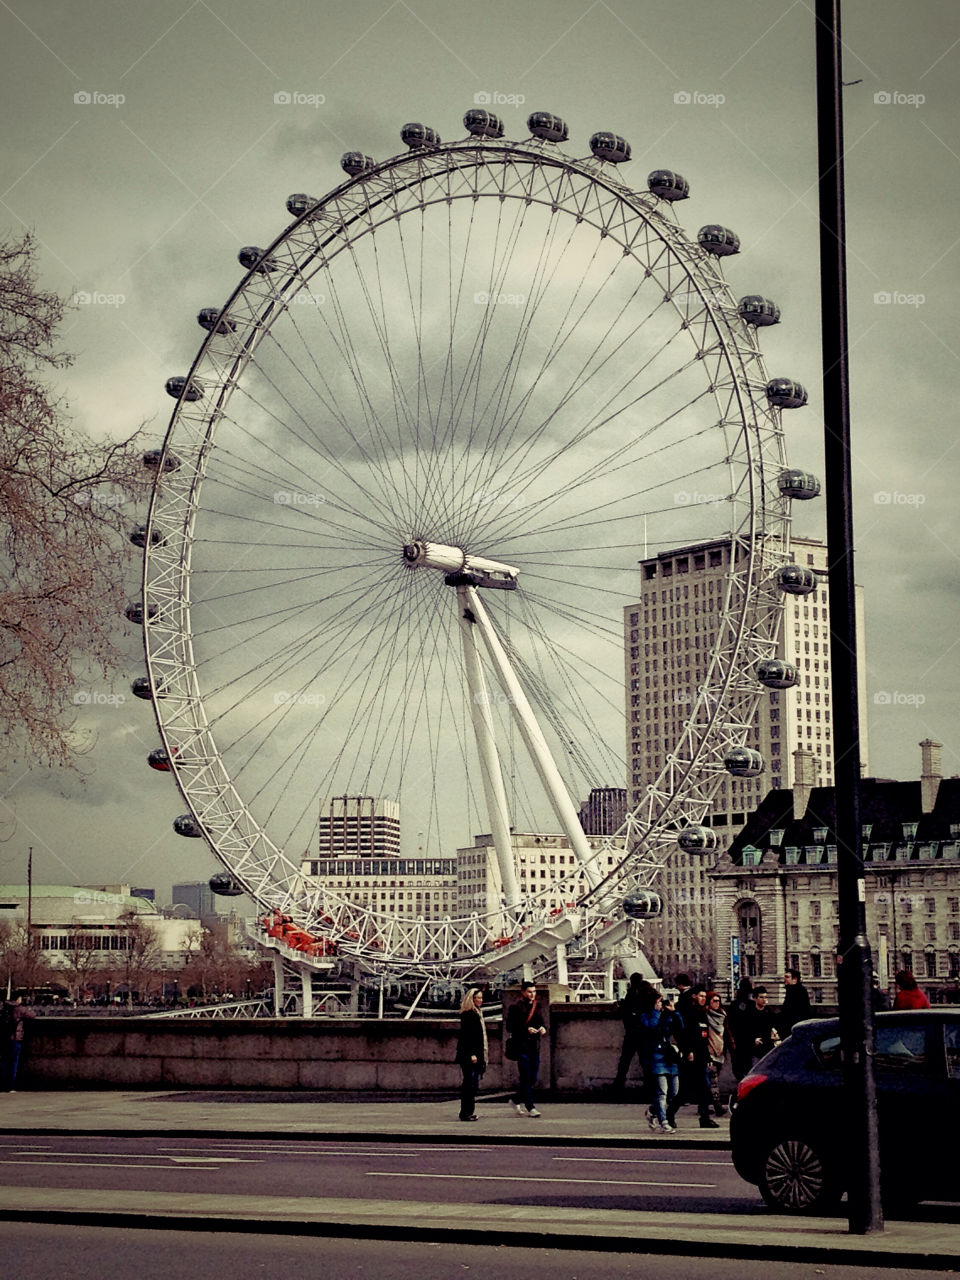  London eye